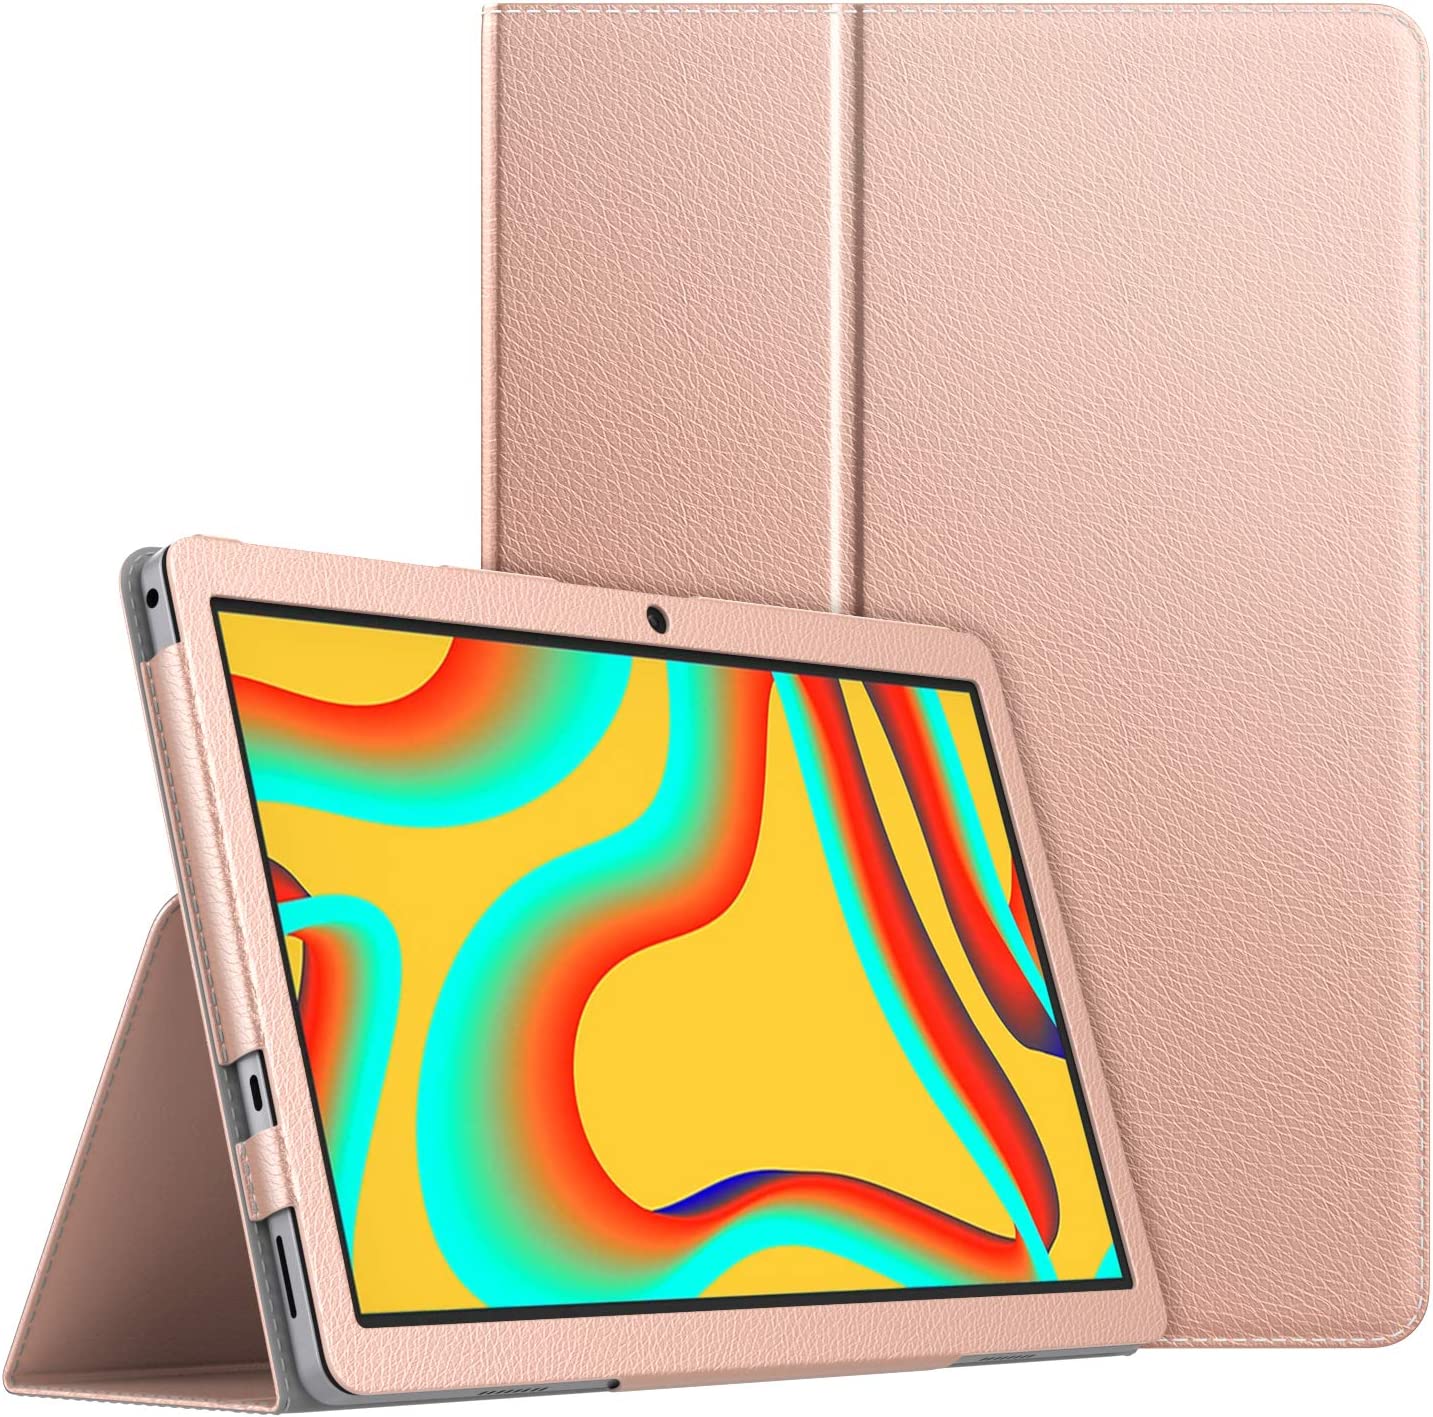 MoKo Case Compatible with Vankyo MatrixPad S30 10 Inch Tablet